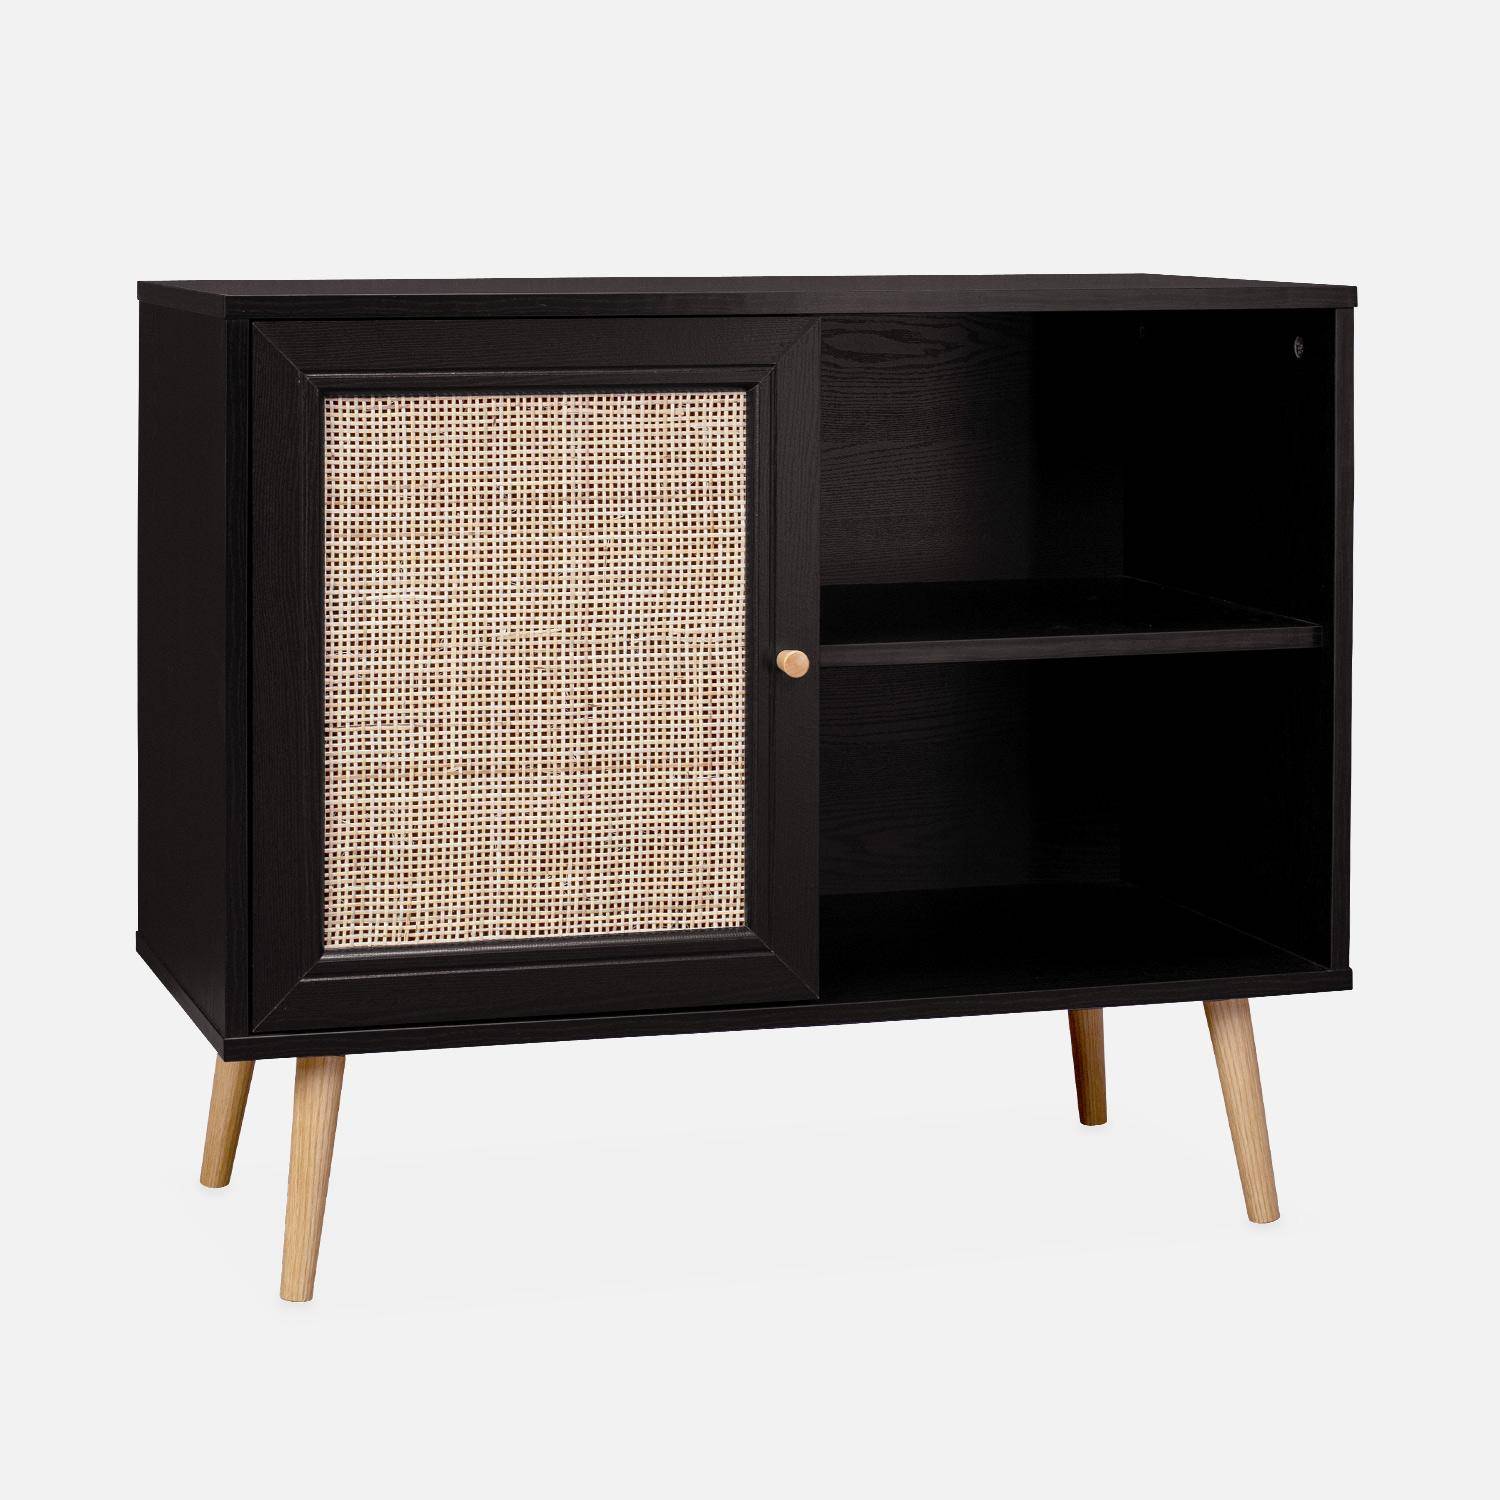 Wooden and cane rattan detail storage cabinet with 2 shelves, 1 cupboard, Scandi-style legs, 80x39x65.8cm - Boheme - Black,sweeek,Photo2